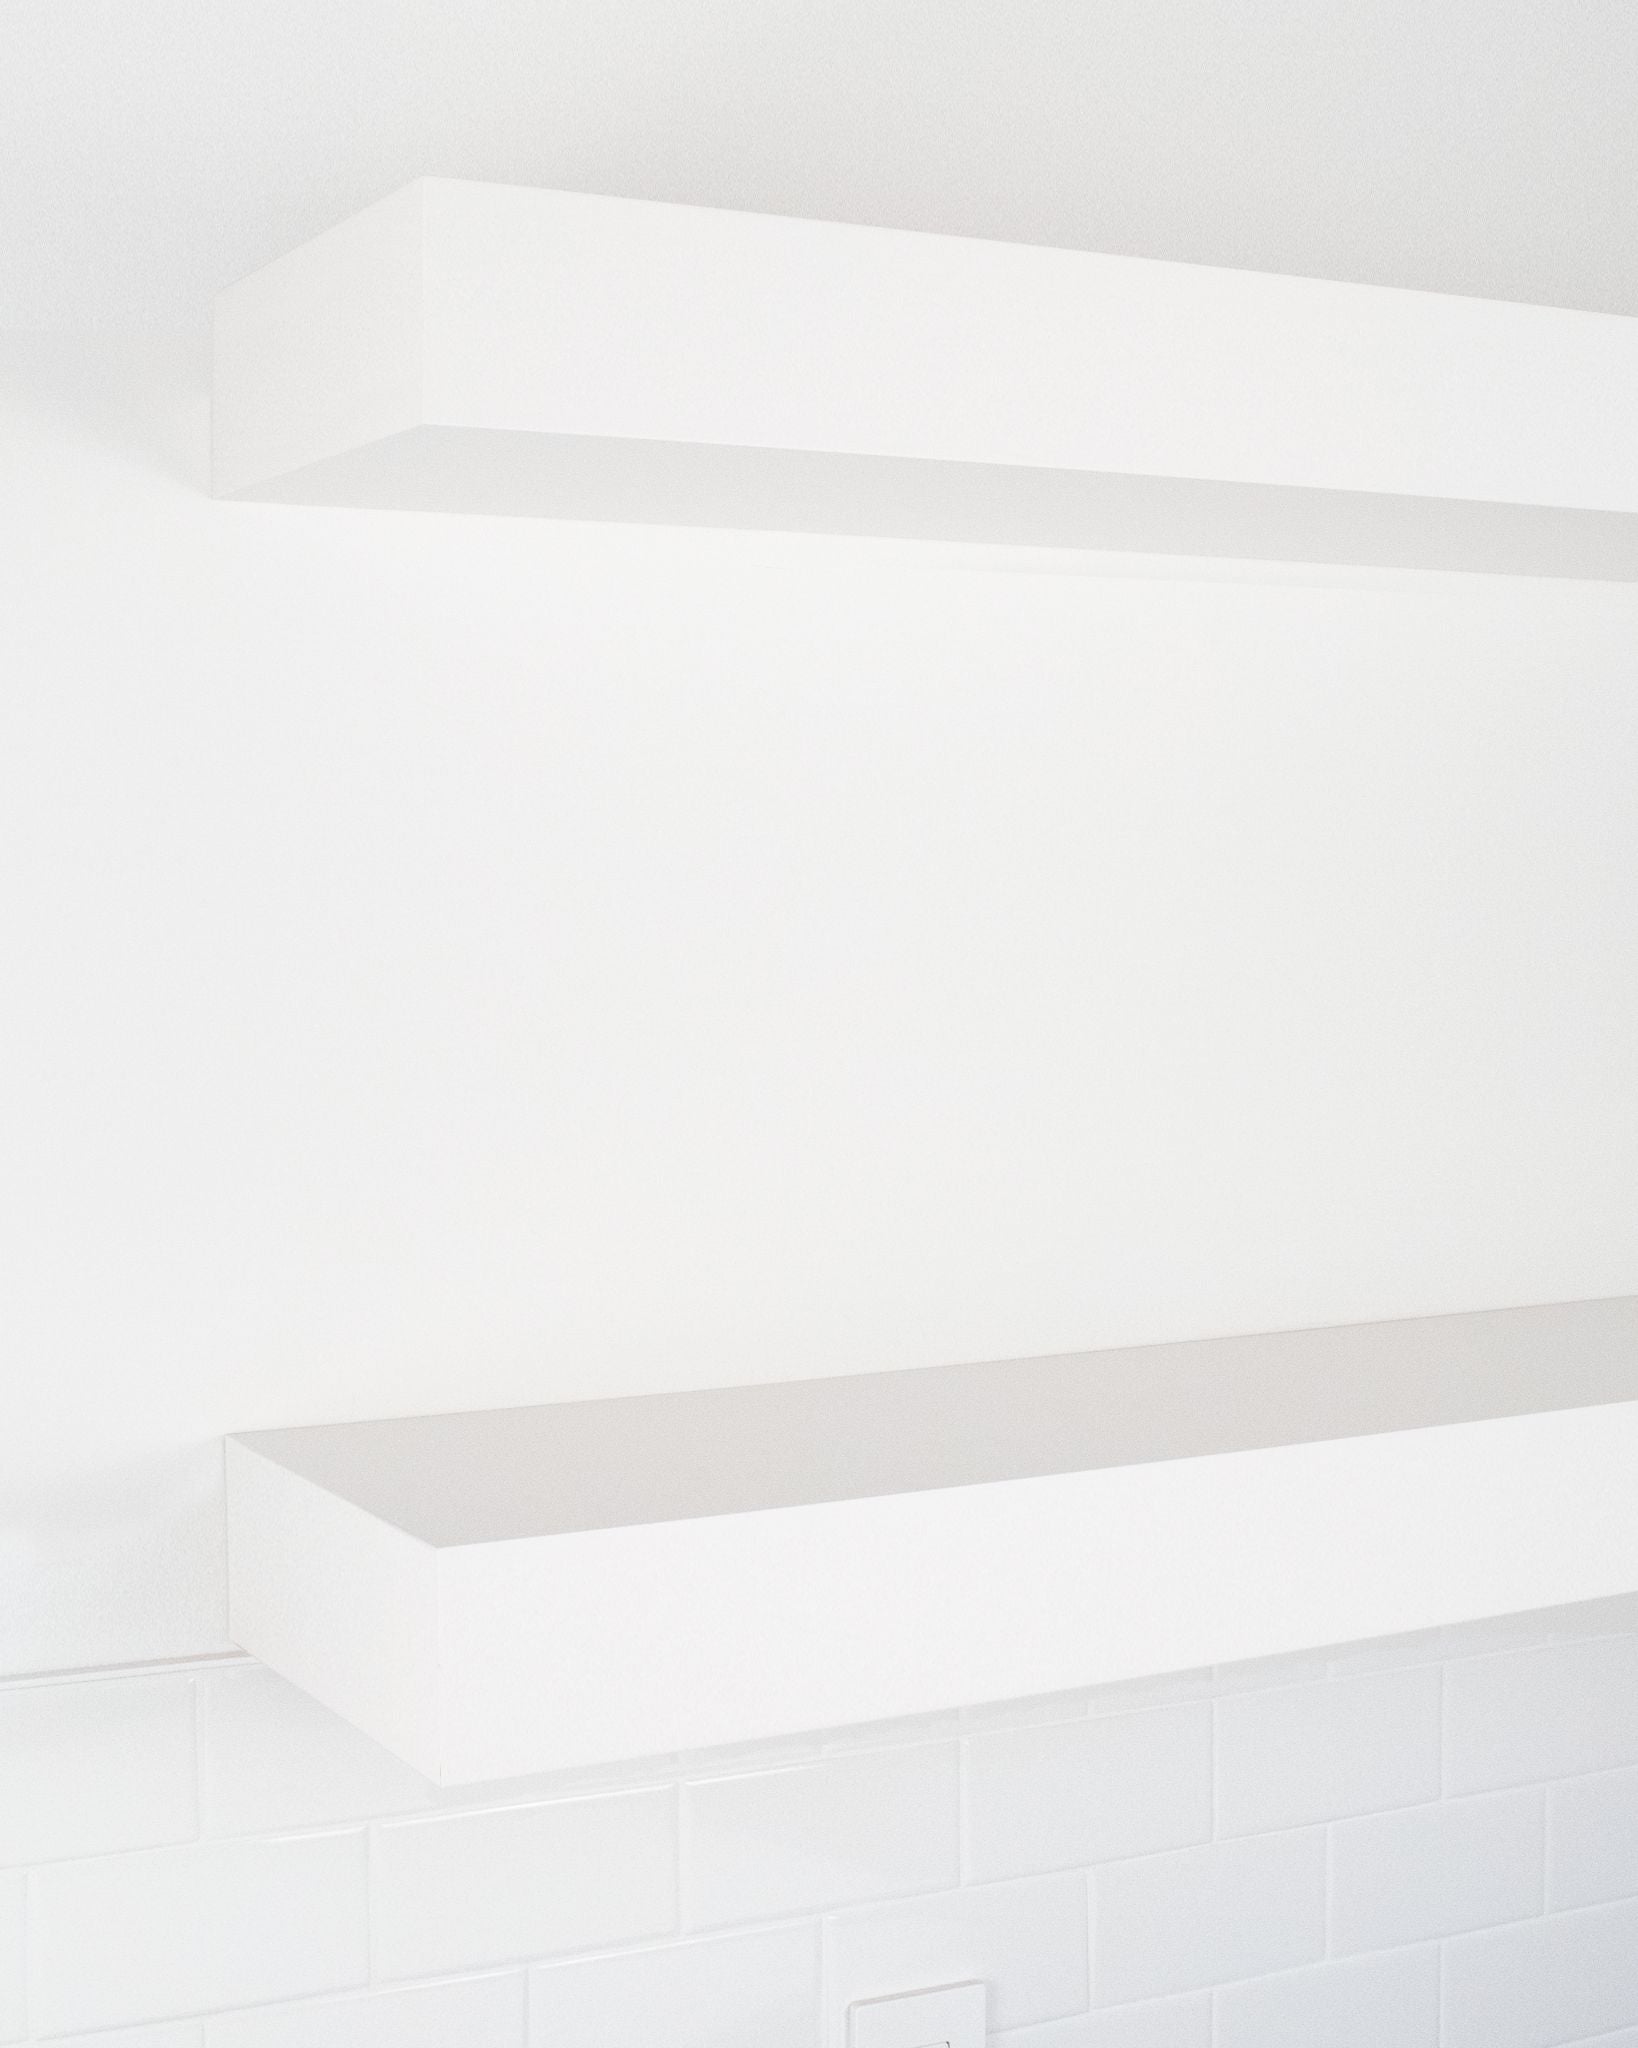 White Floating Shelves 2-4" thick